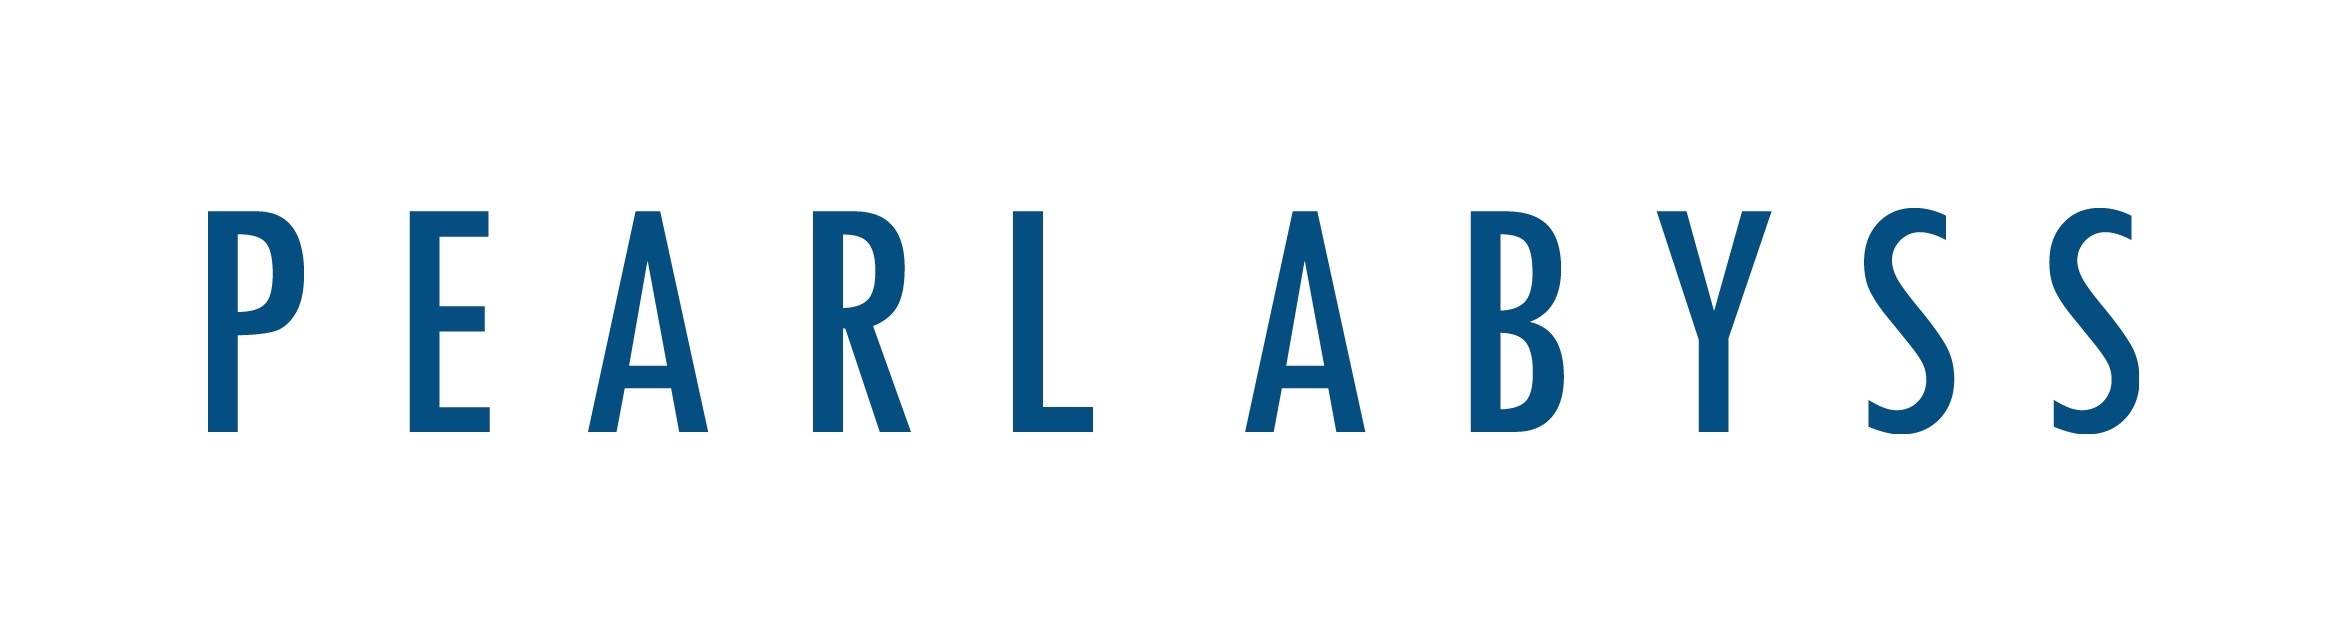 pearlabyss logo